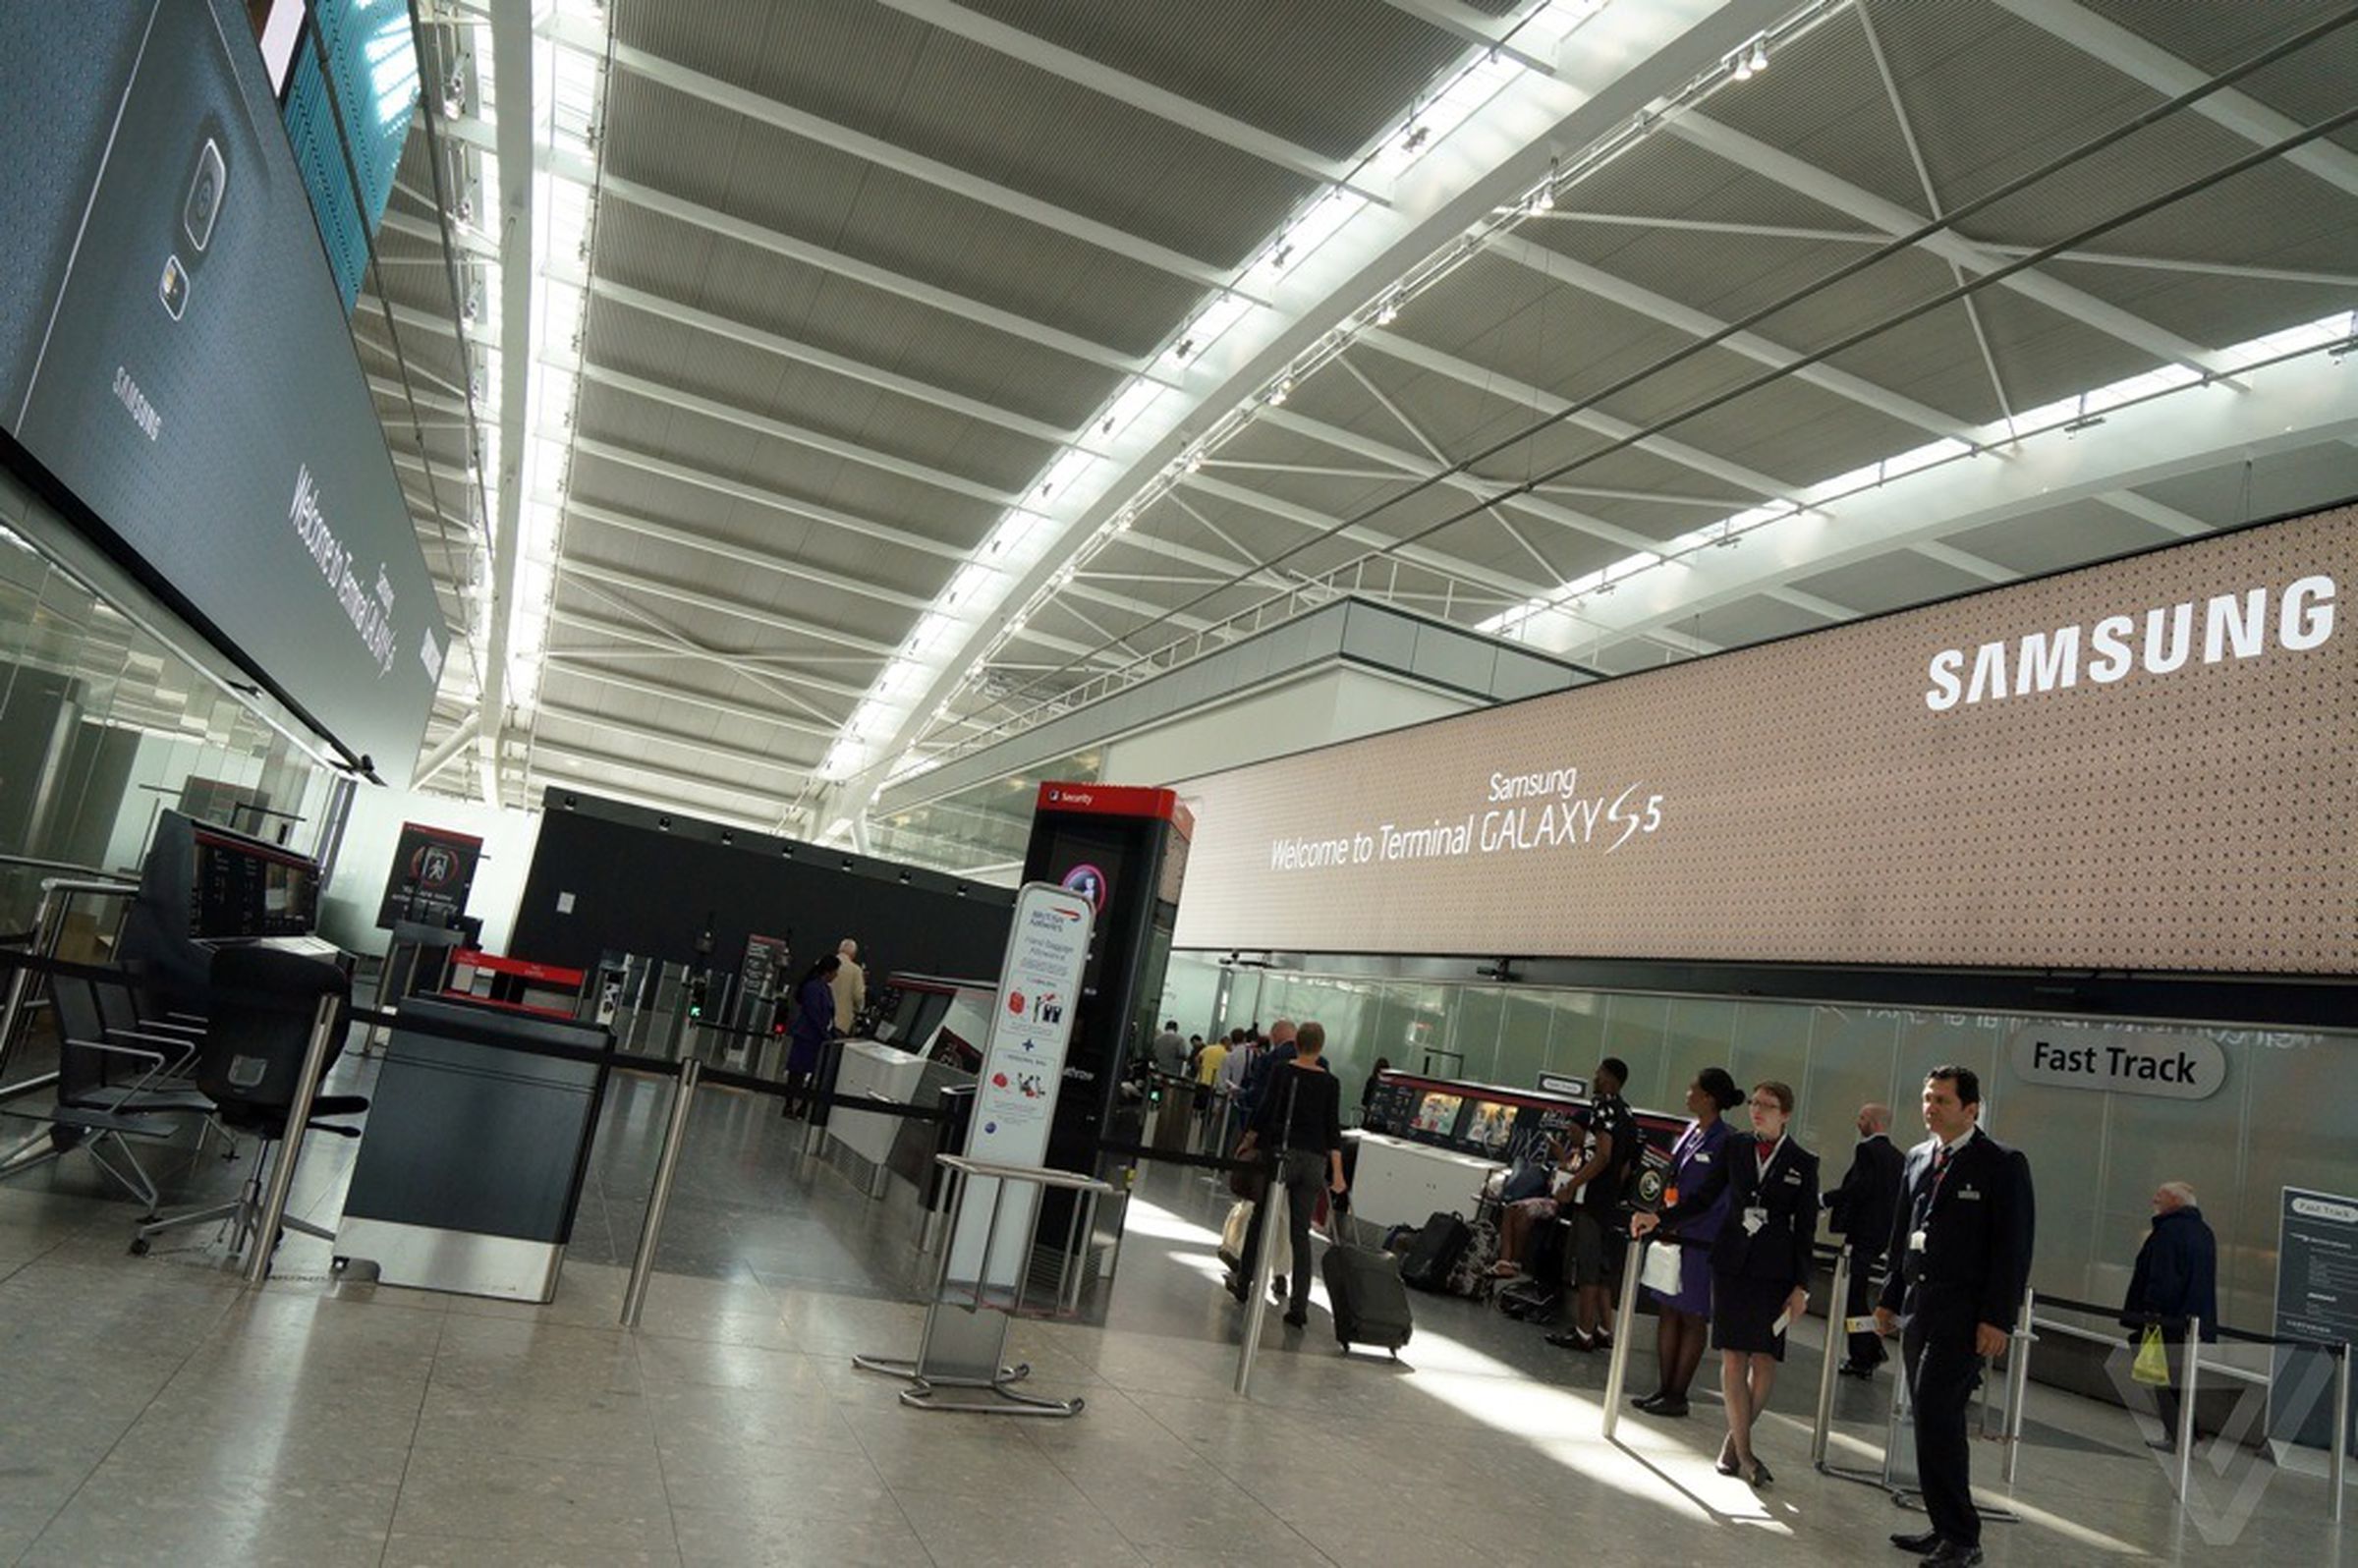 Samsung ads at Heathrow's Terminal 5